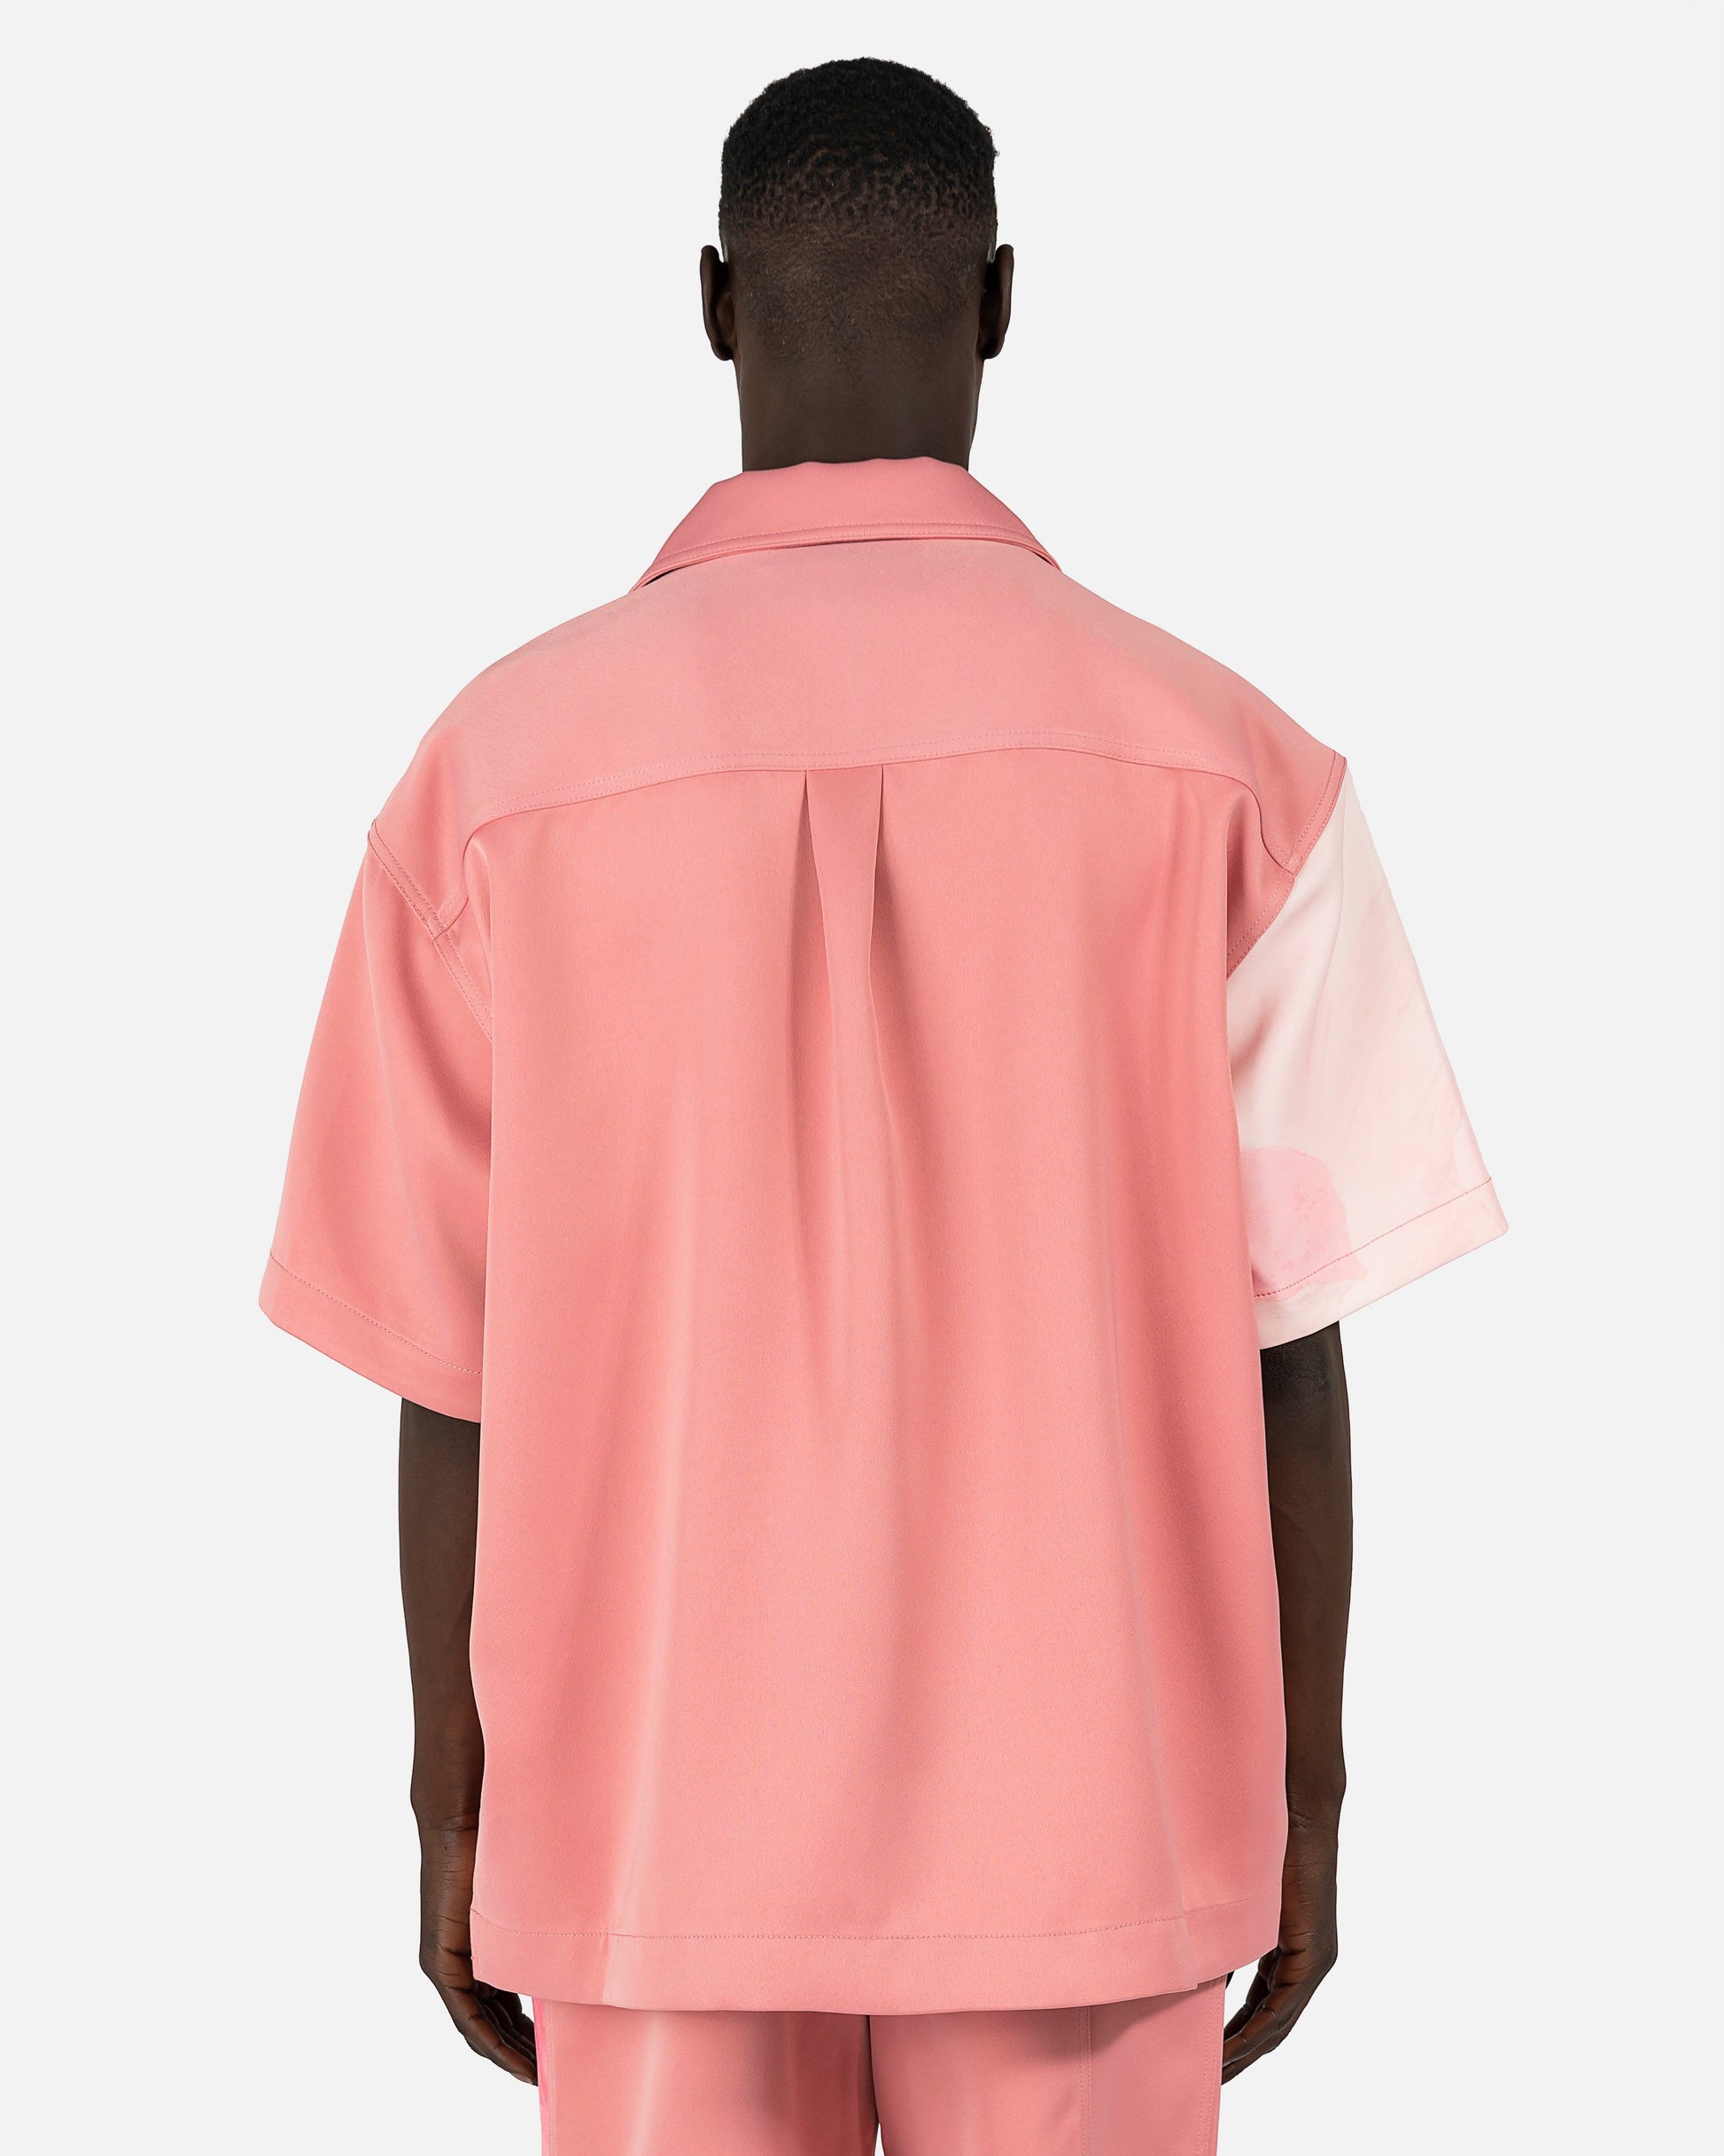 Feng Chen Wang Men's Shirts Chinese Landscape Print Shirt in Pink